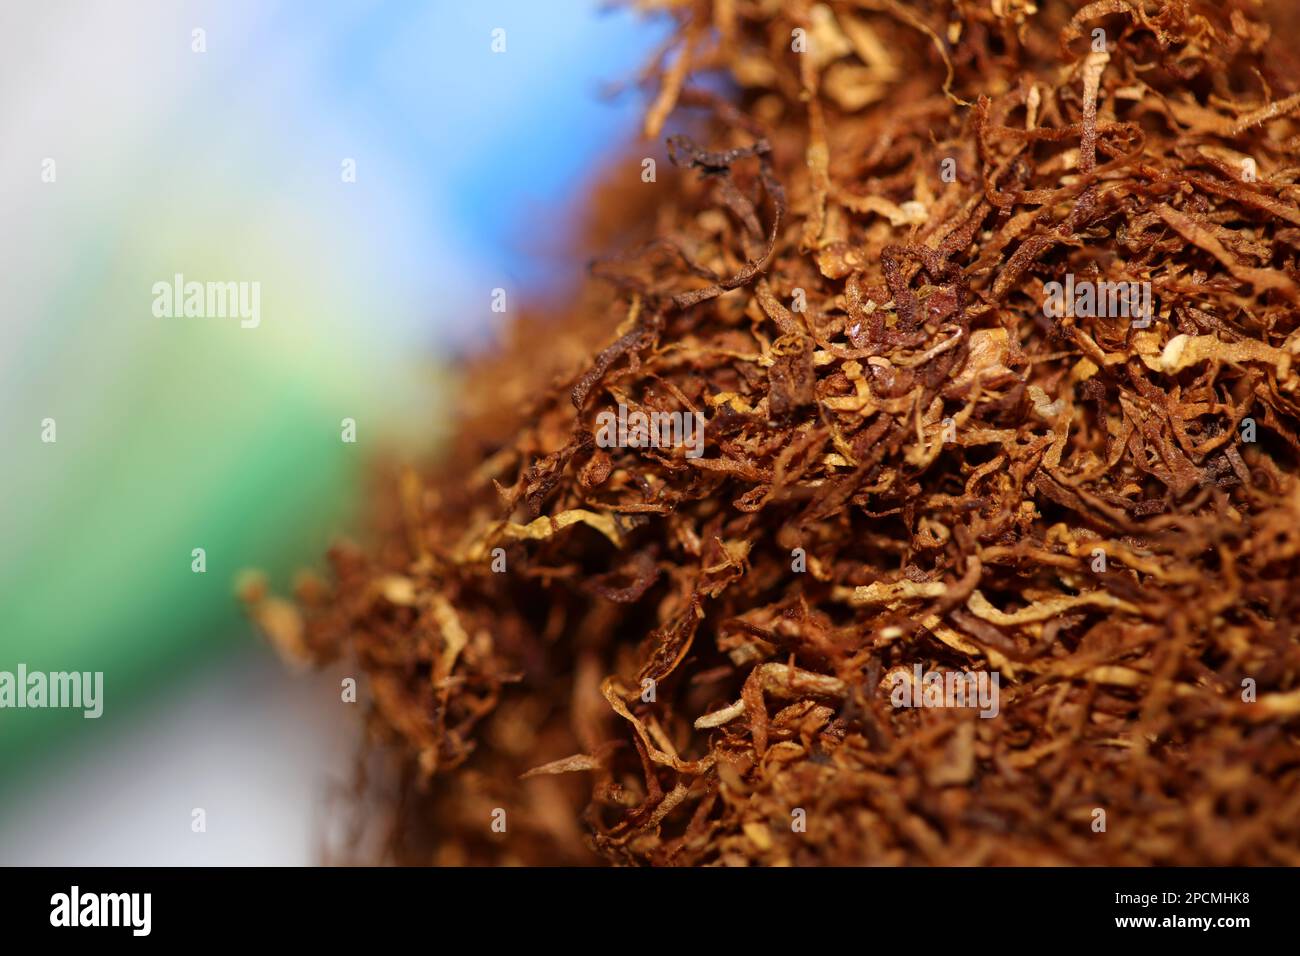 Tubos de cigarrillos fotografías e imágenes de alta resolución - Alamy